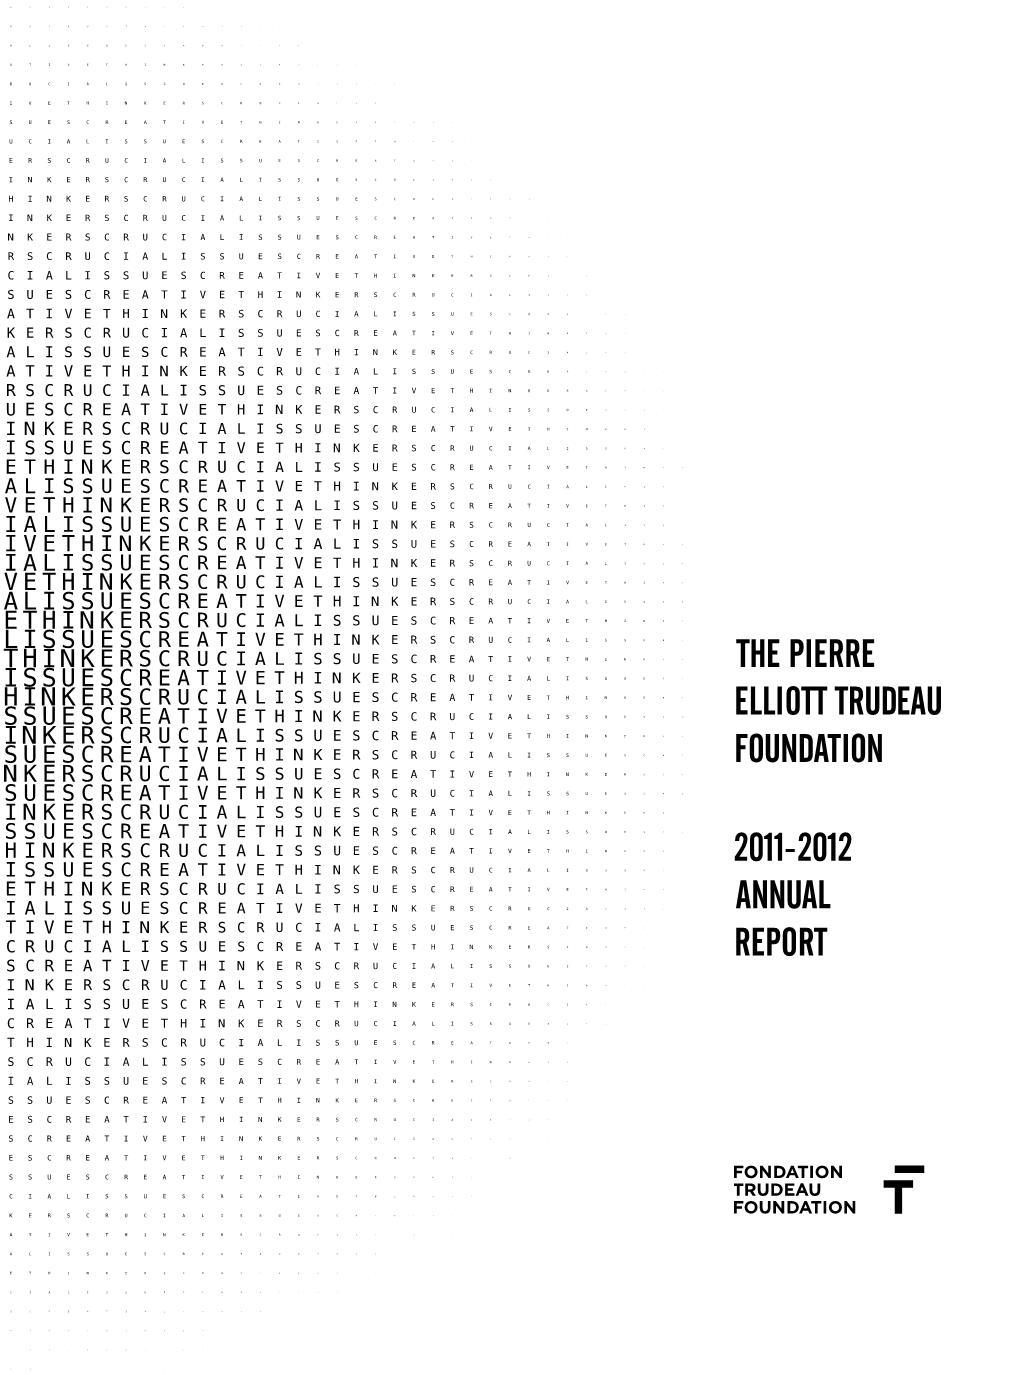 2011-2012 Annual Report the Pierre Elliott Trudeau